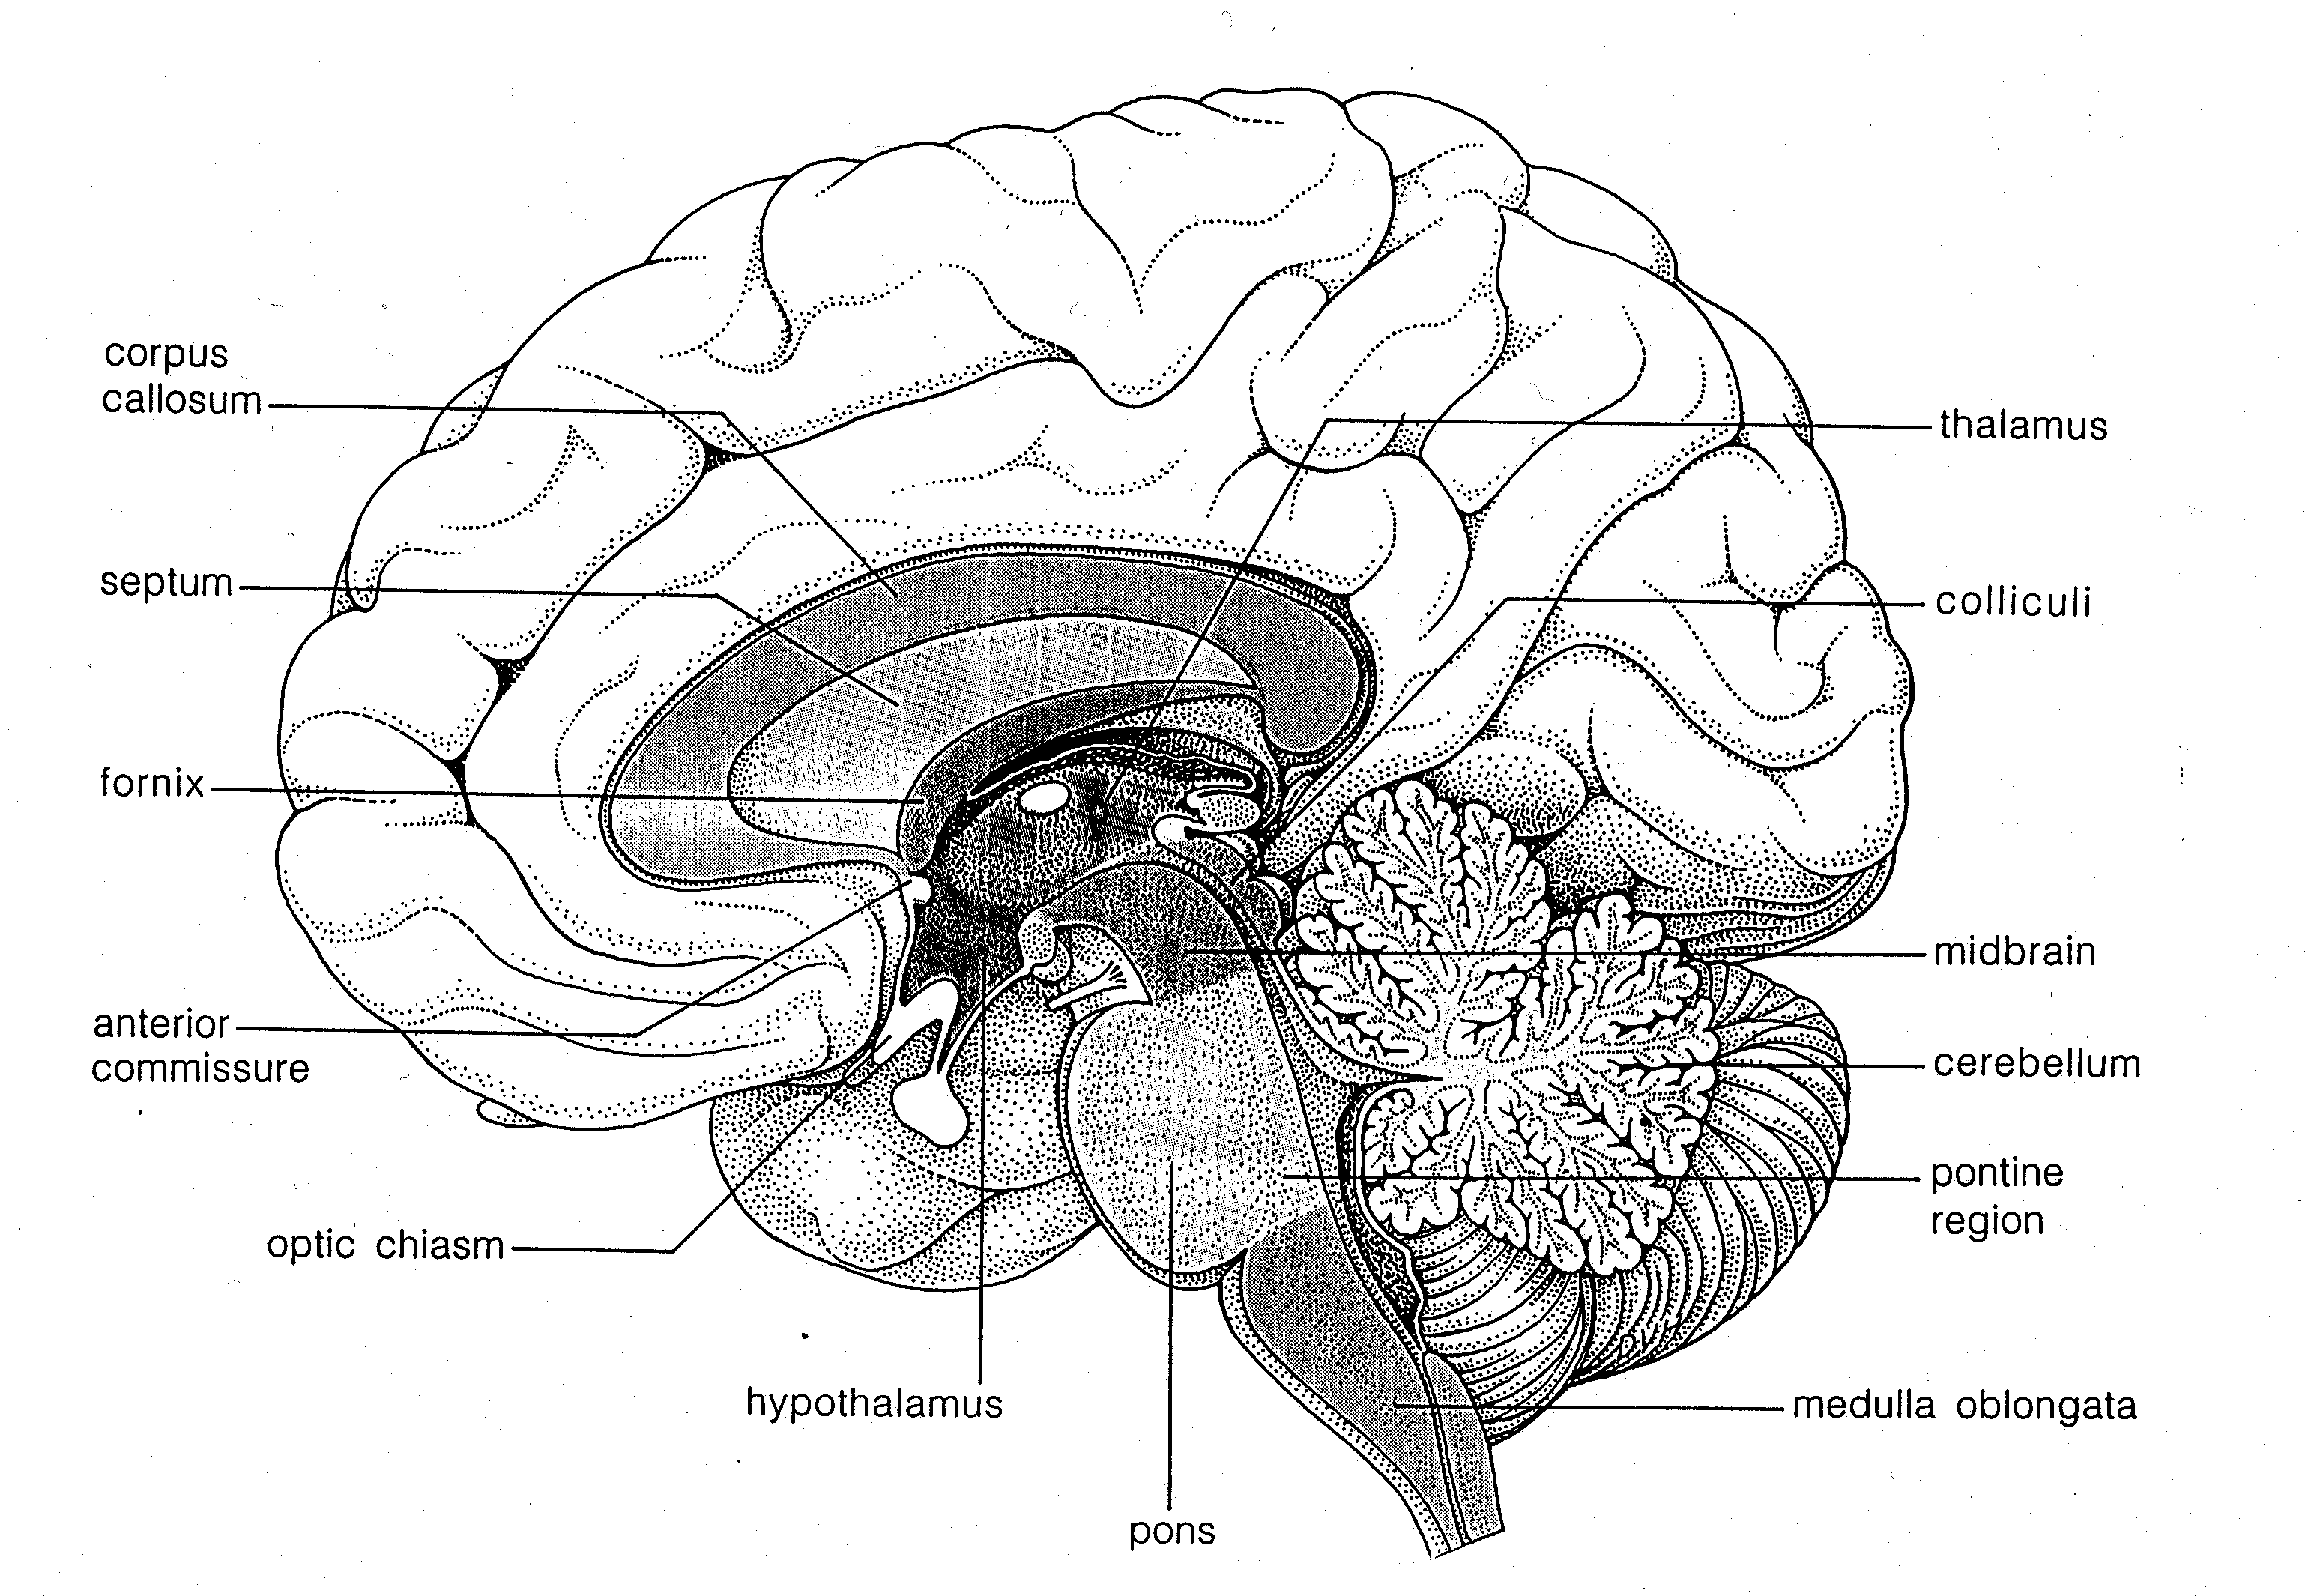 Самый древний отдел мозга